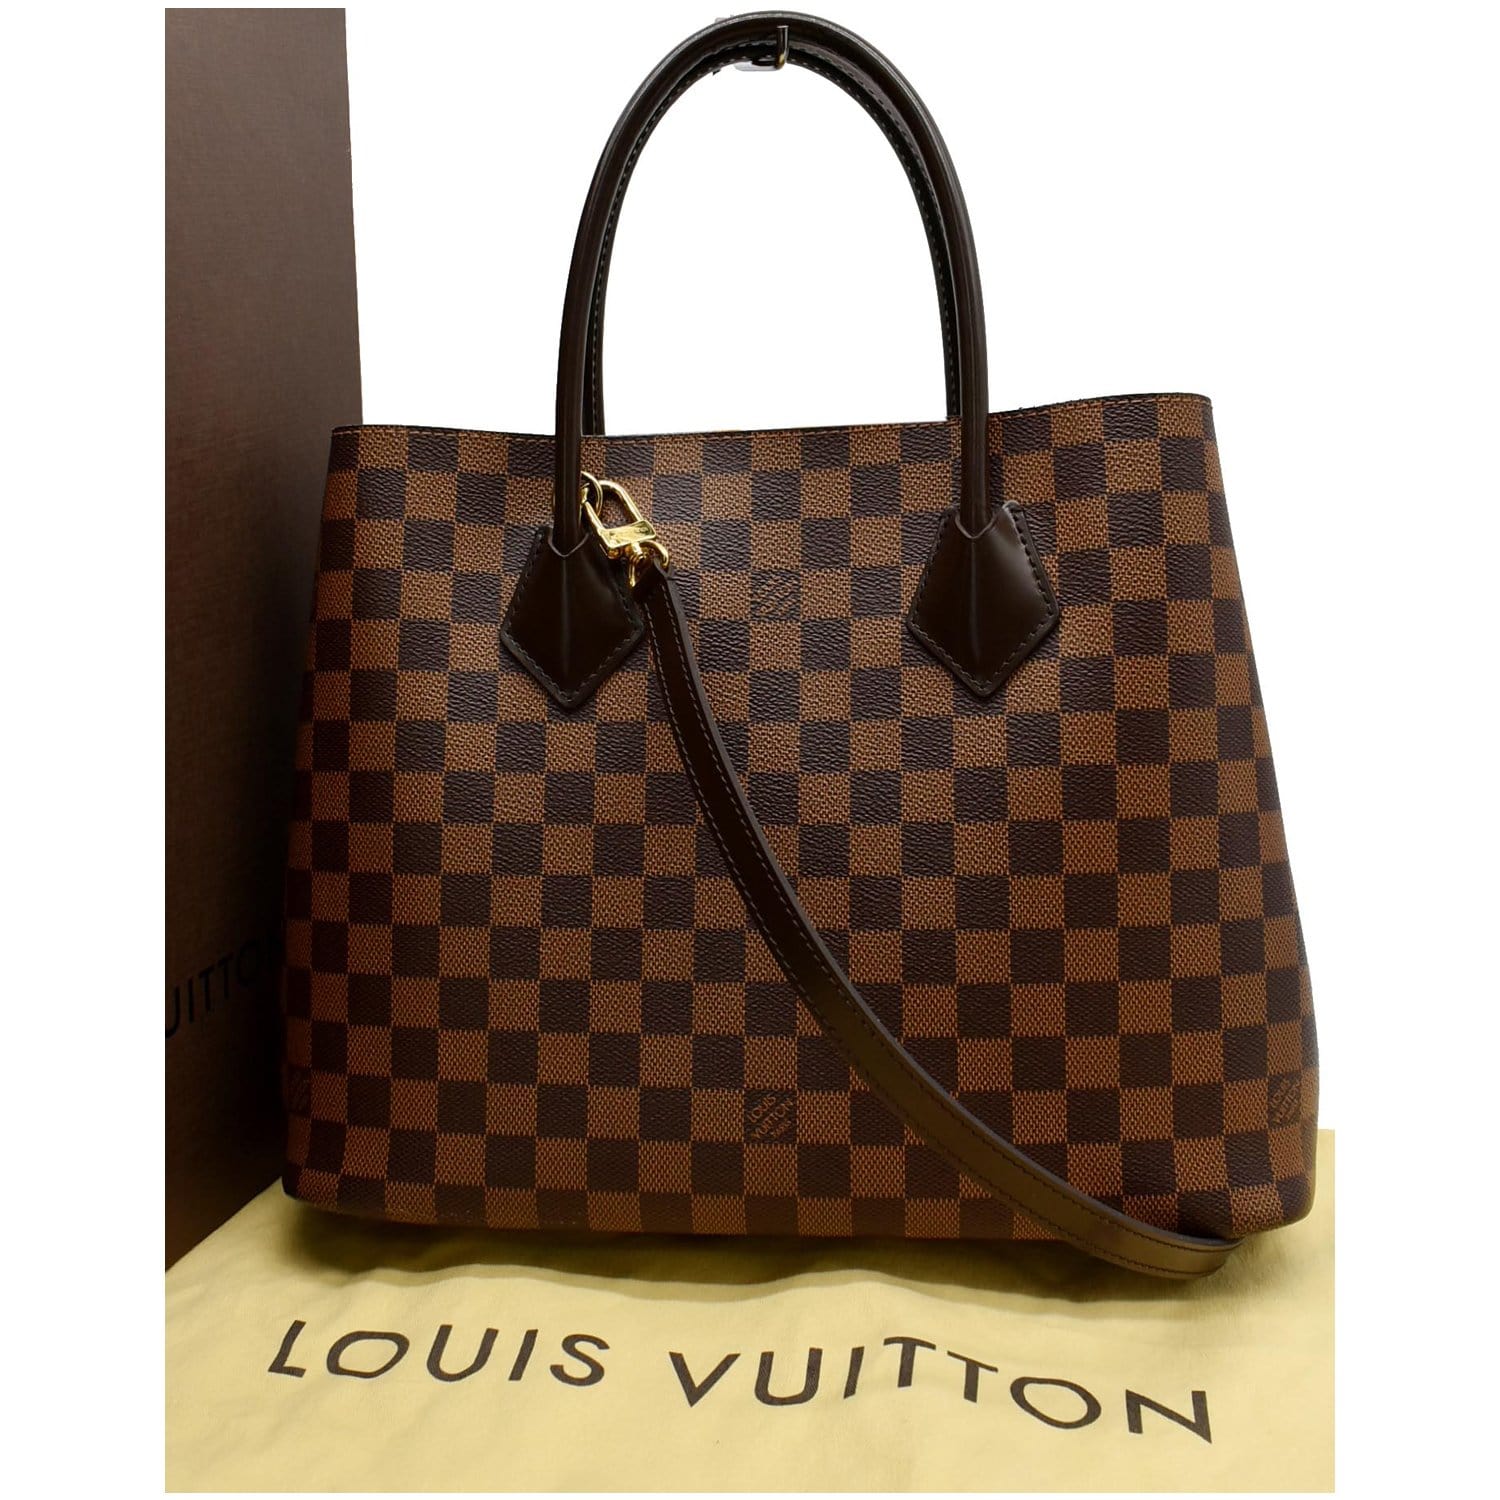 Louis Vuitton Kensington Damier Ebene 2 Way Brown - $1600